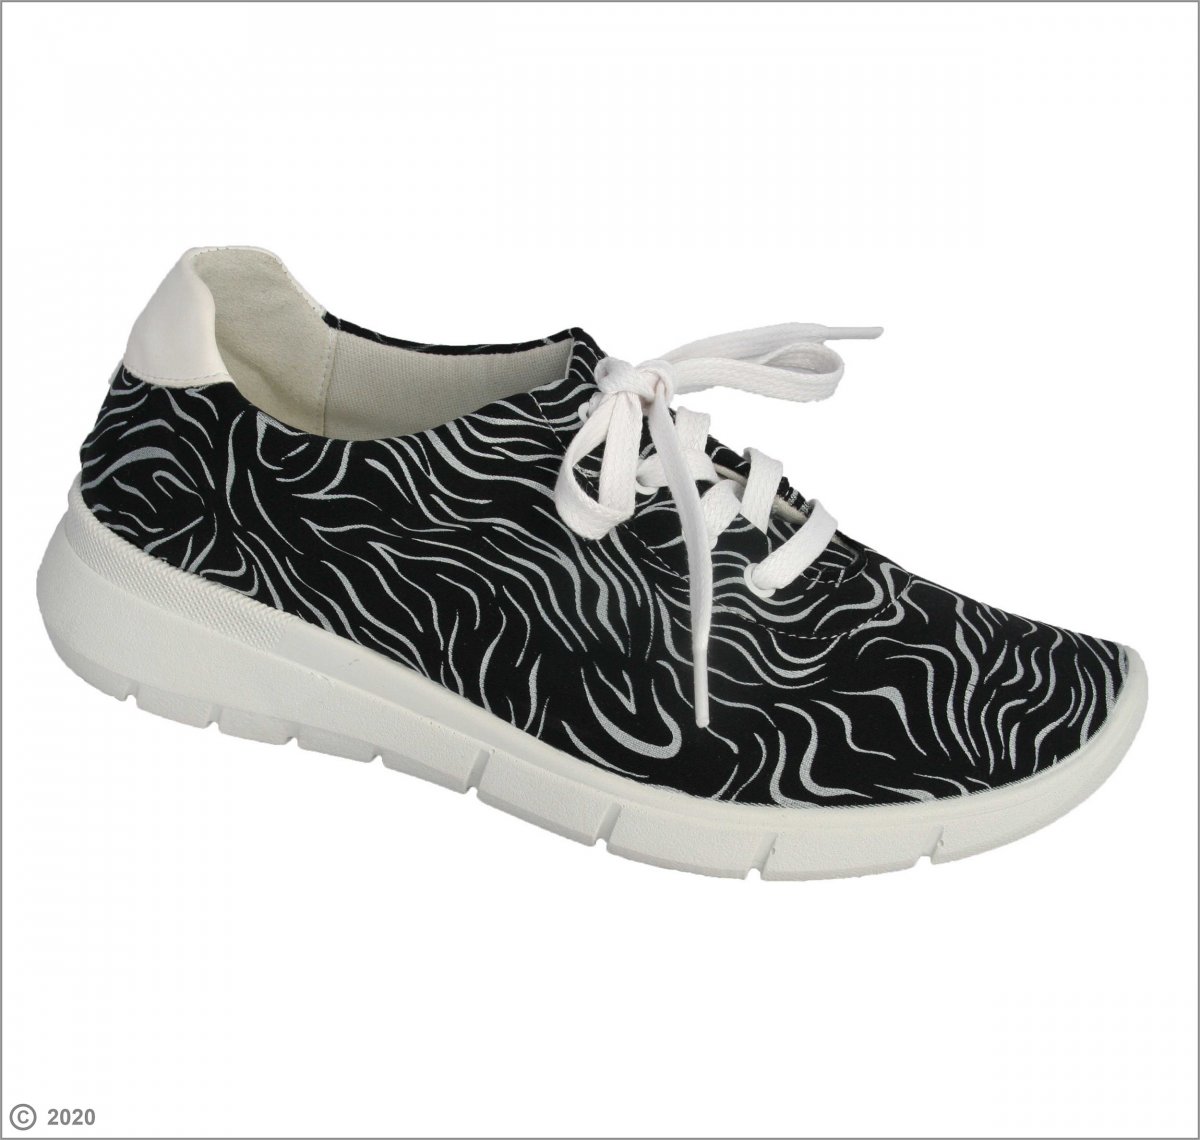 Integrere Rettidig Søg L76 | Snøre sko til damer fra Arcopedico | Arcopedico shop DK